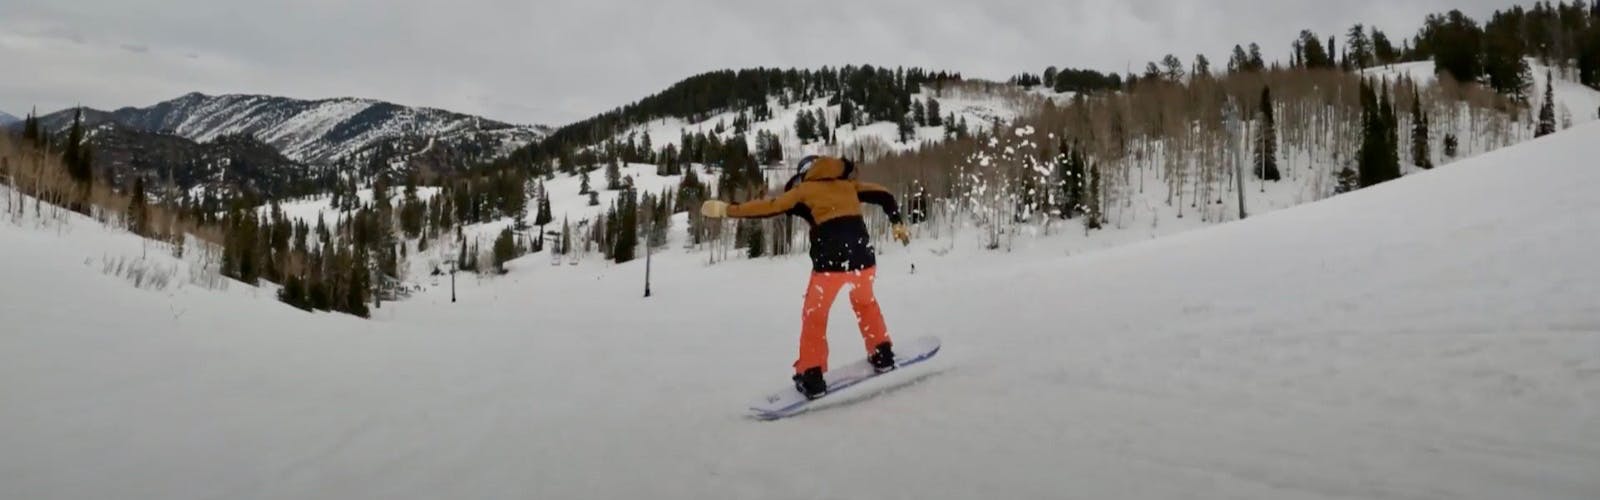 Snowboard Expert Sydney Johnson jumping with the Roxy XOXO Pro snowboard on a groomed run